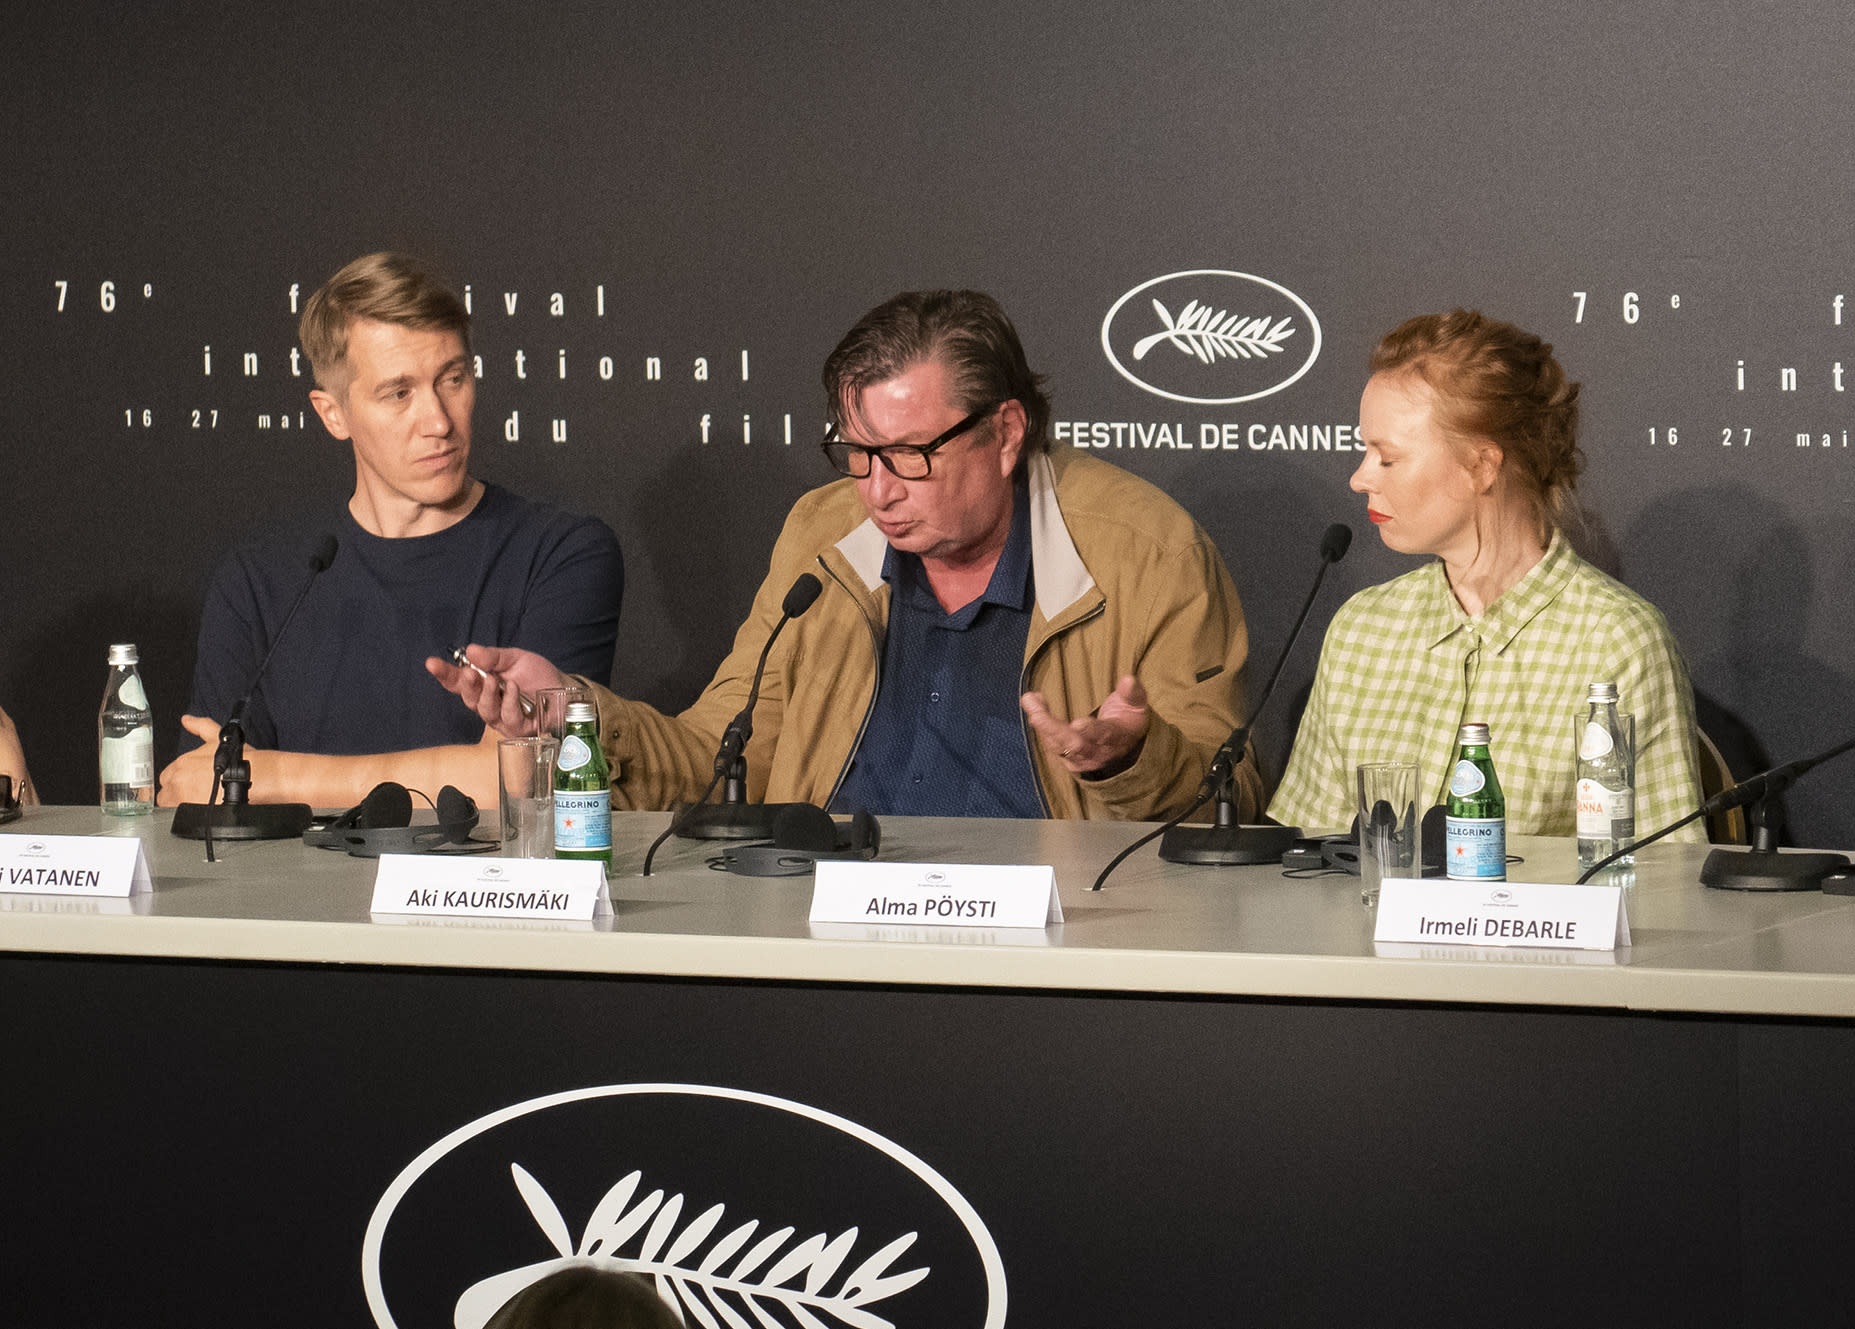 Bintang-bintang daun Kaurismäki yang gugur: "Tiada tekanan" terhadap anugerah Cannes yang berpotensi